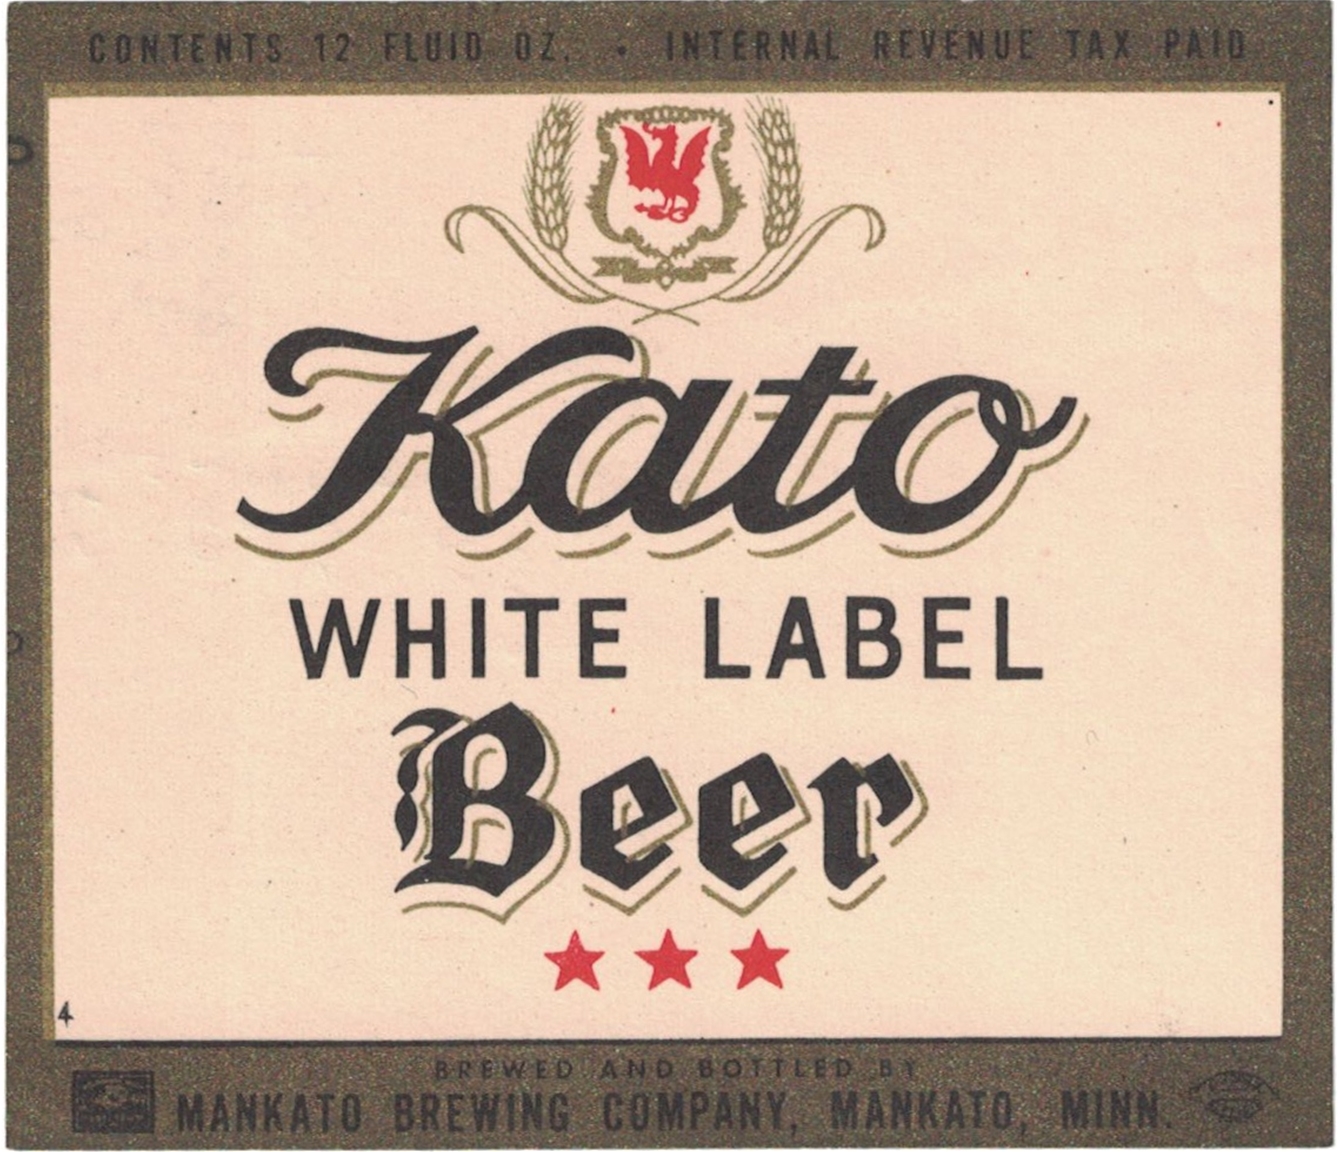 Kato White Label Beer IRTP Label